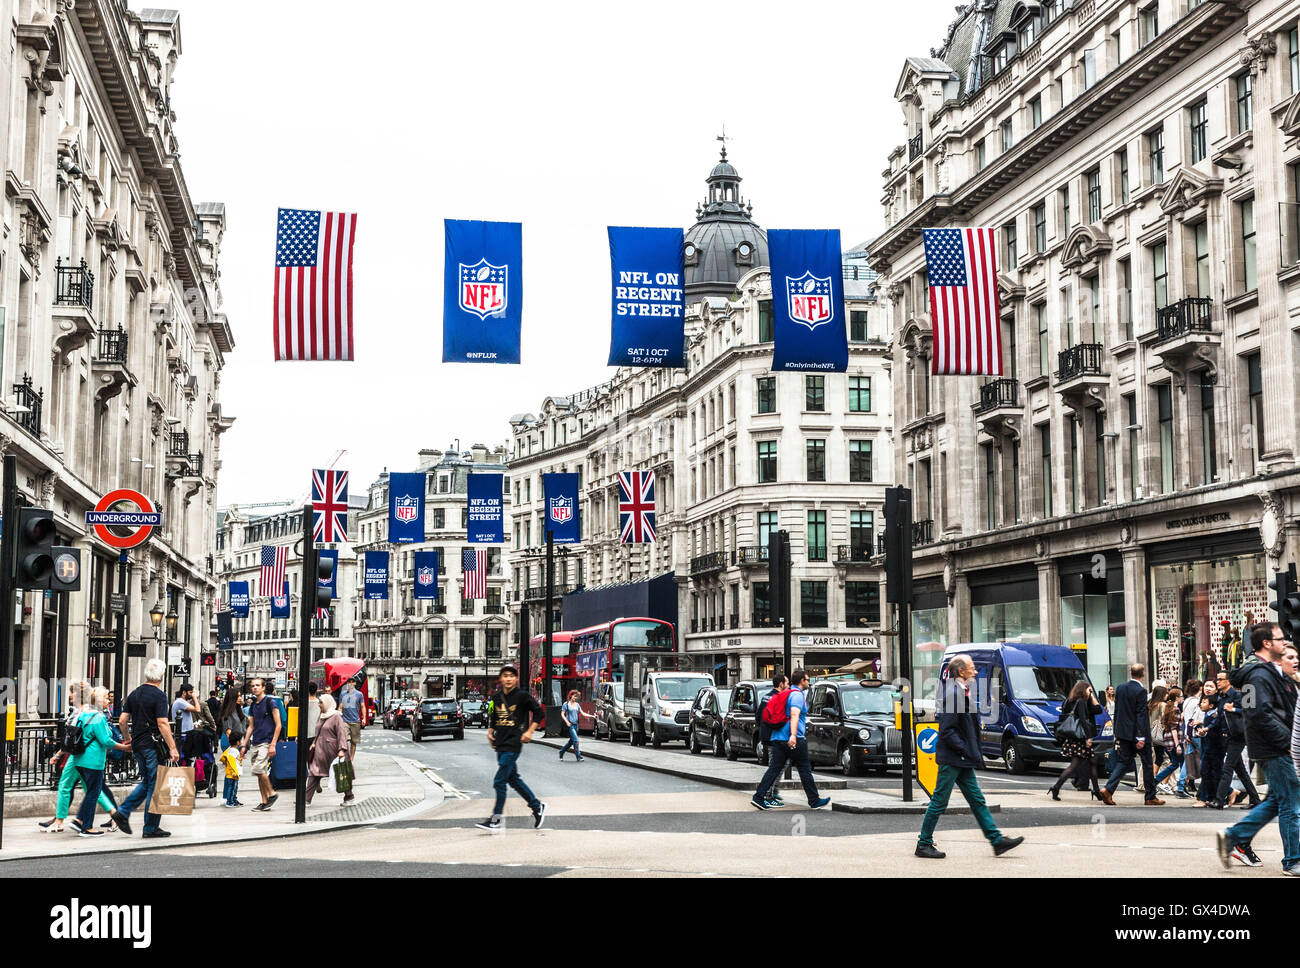 NFL NFLUK event banners on Regents Street, London, England, UK. Stock Photo